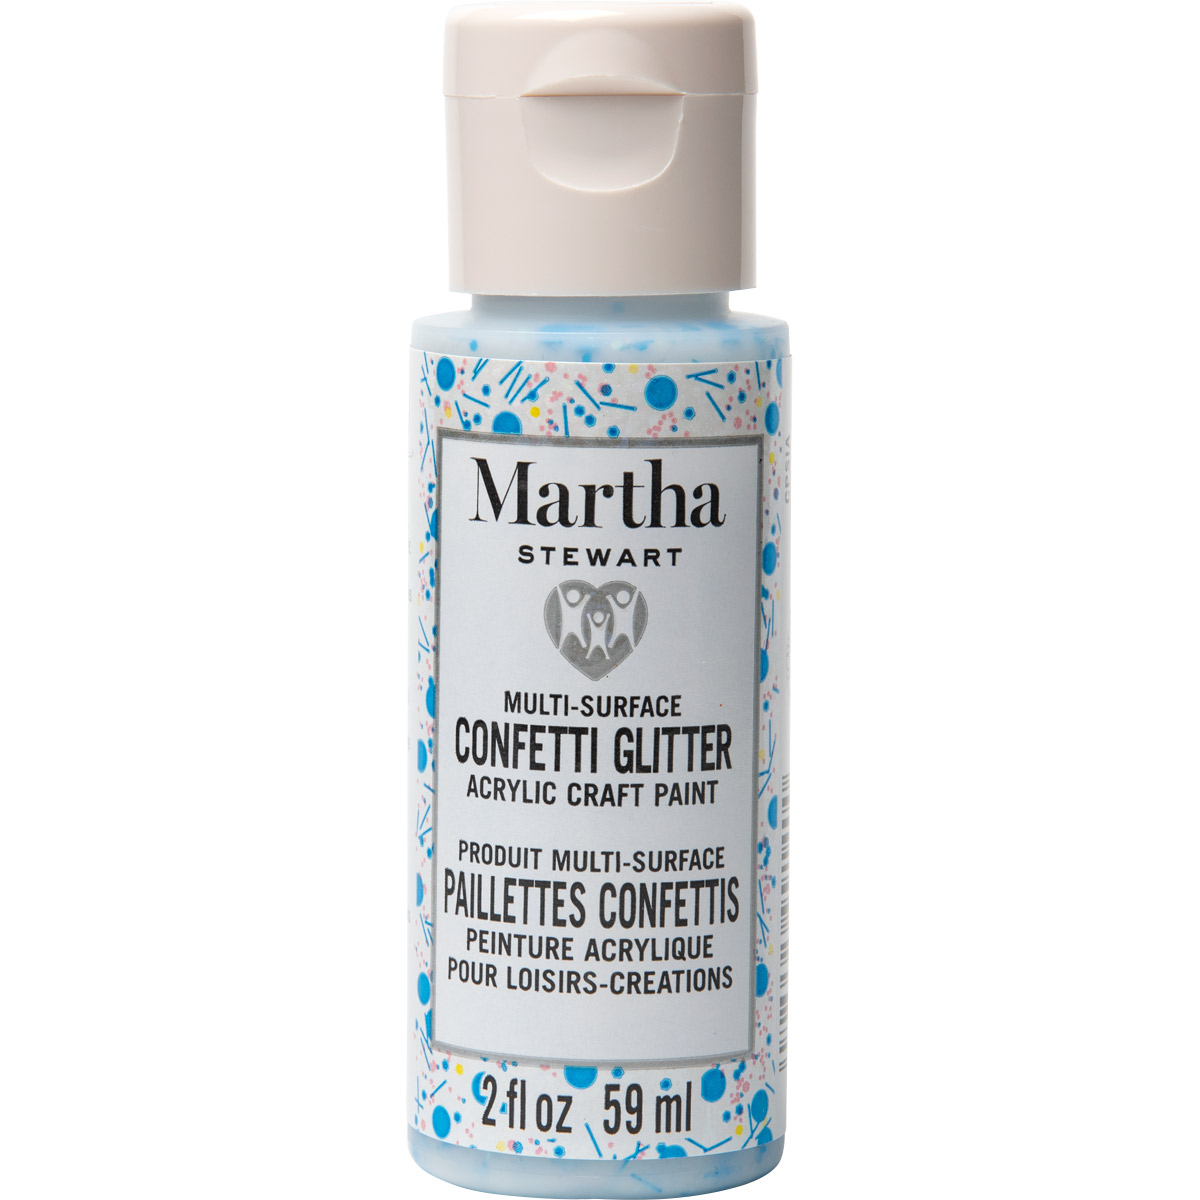 Martha Stewart ® Multi-Surface Confetti Glitter Acrylic Craft Paint CPSIA - Sapphire Celebrations, 2